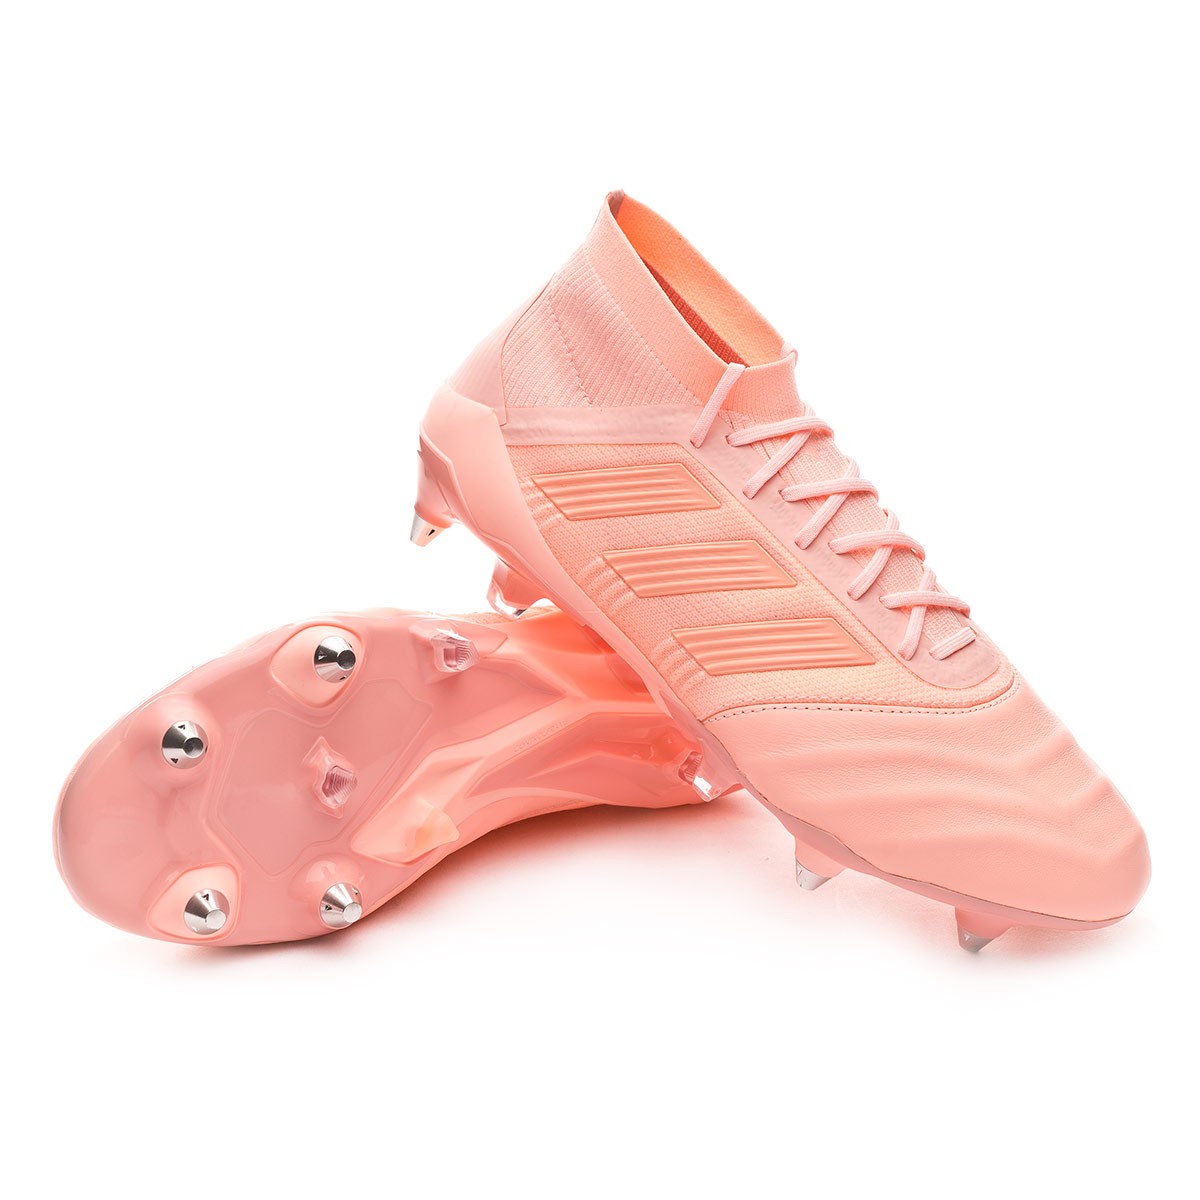 Boot Adidas Predator 18 1 Sg Piel Clear Orange Trace Pink Leaked